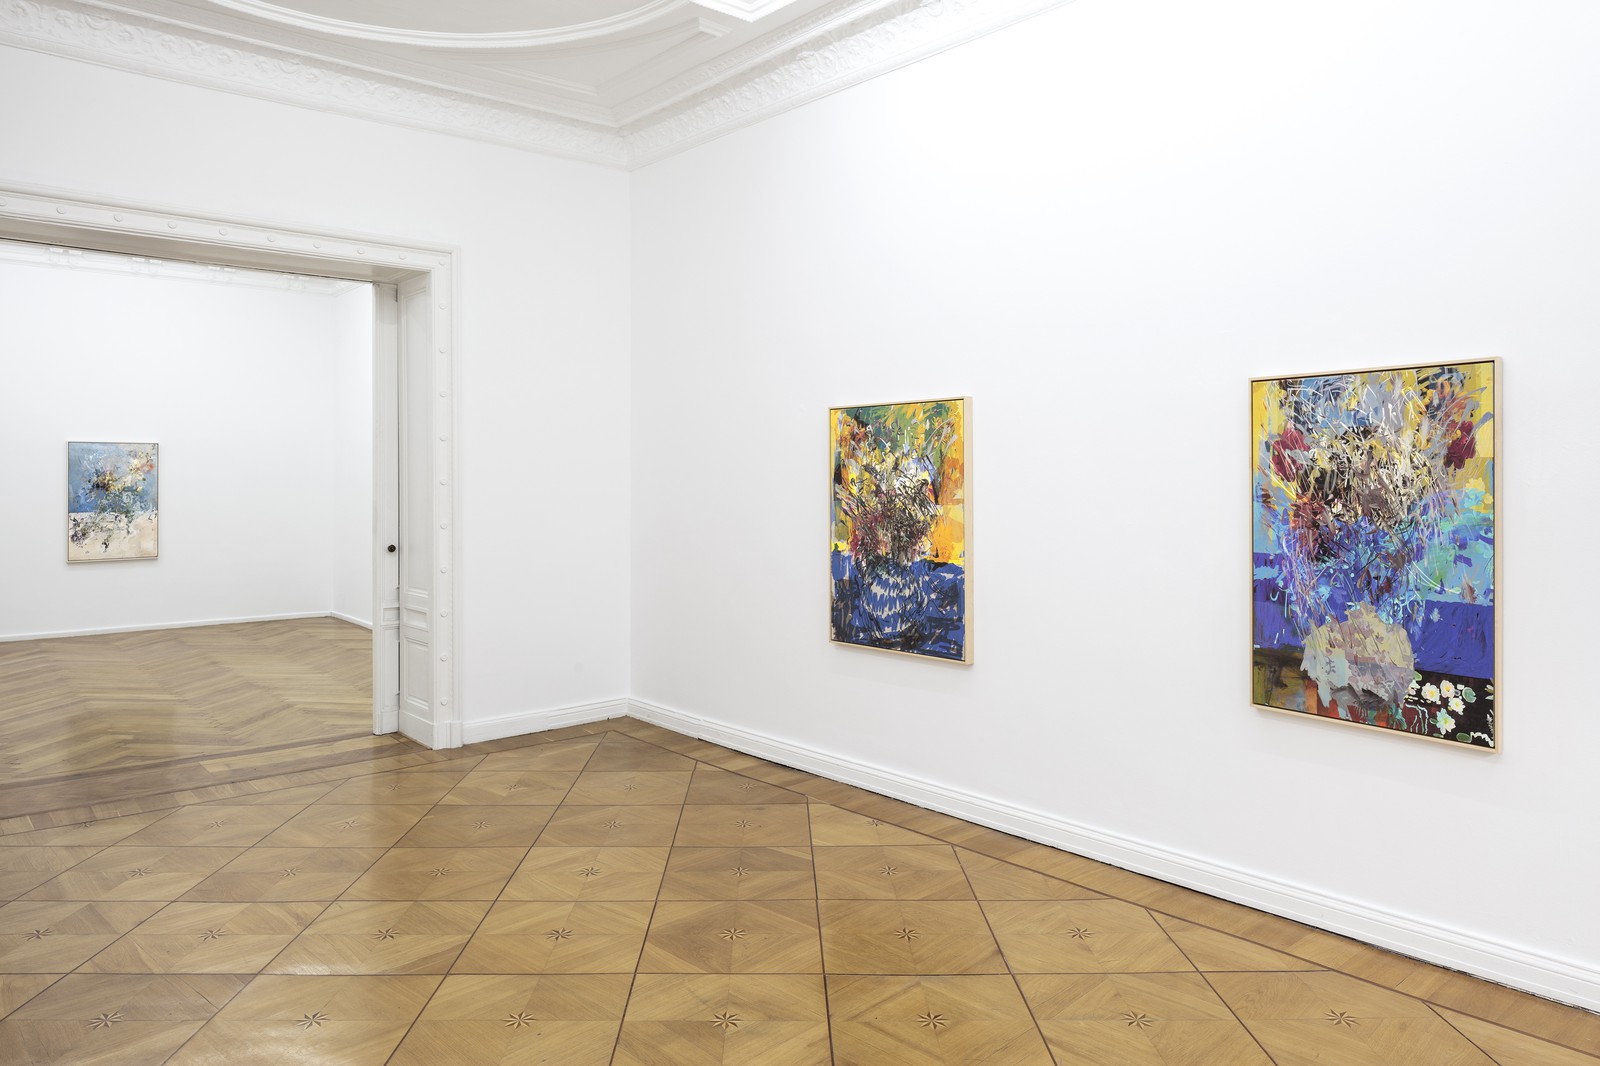 Installation view, Platinum Blonde Black Knights, Société, Berlin, 2019